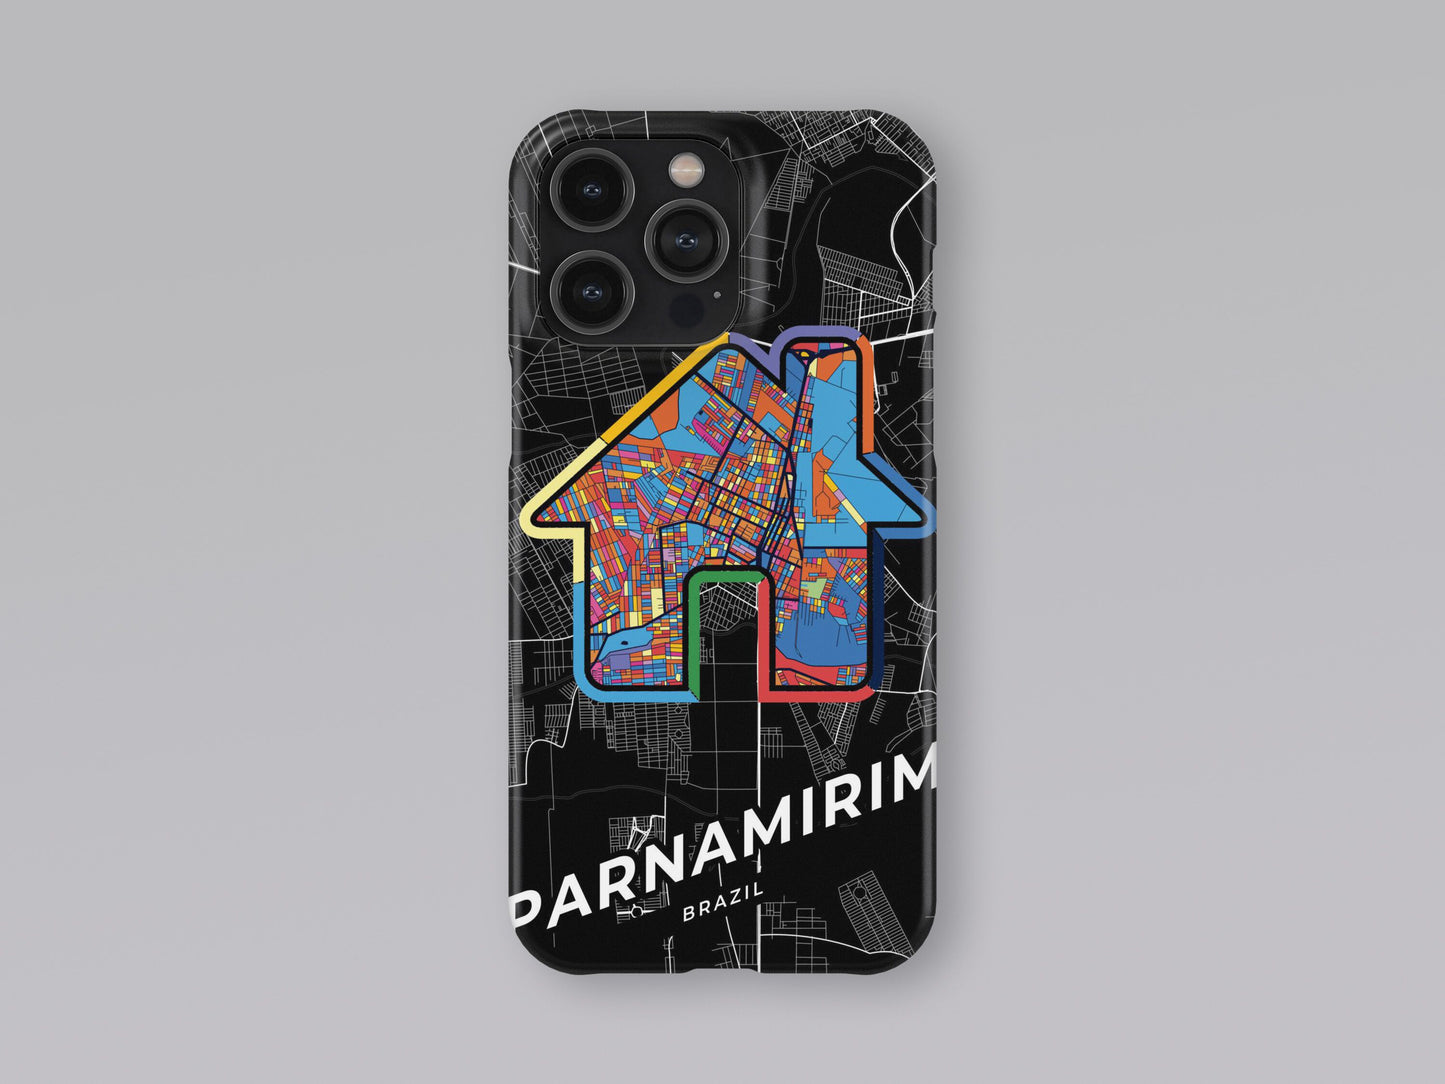 Parnamirim Brazil slim phone case with colorful icon 3